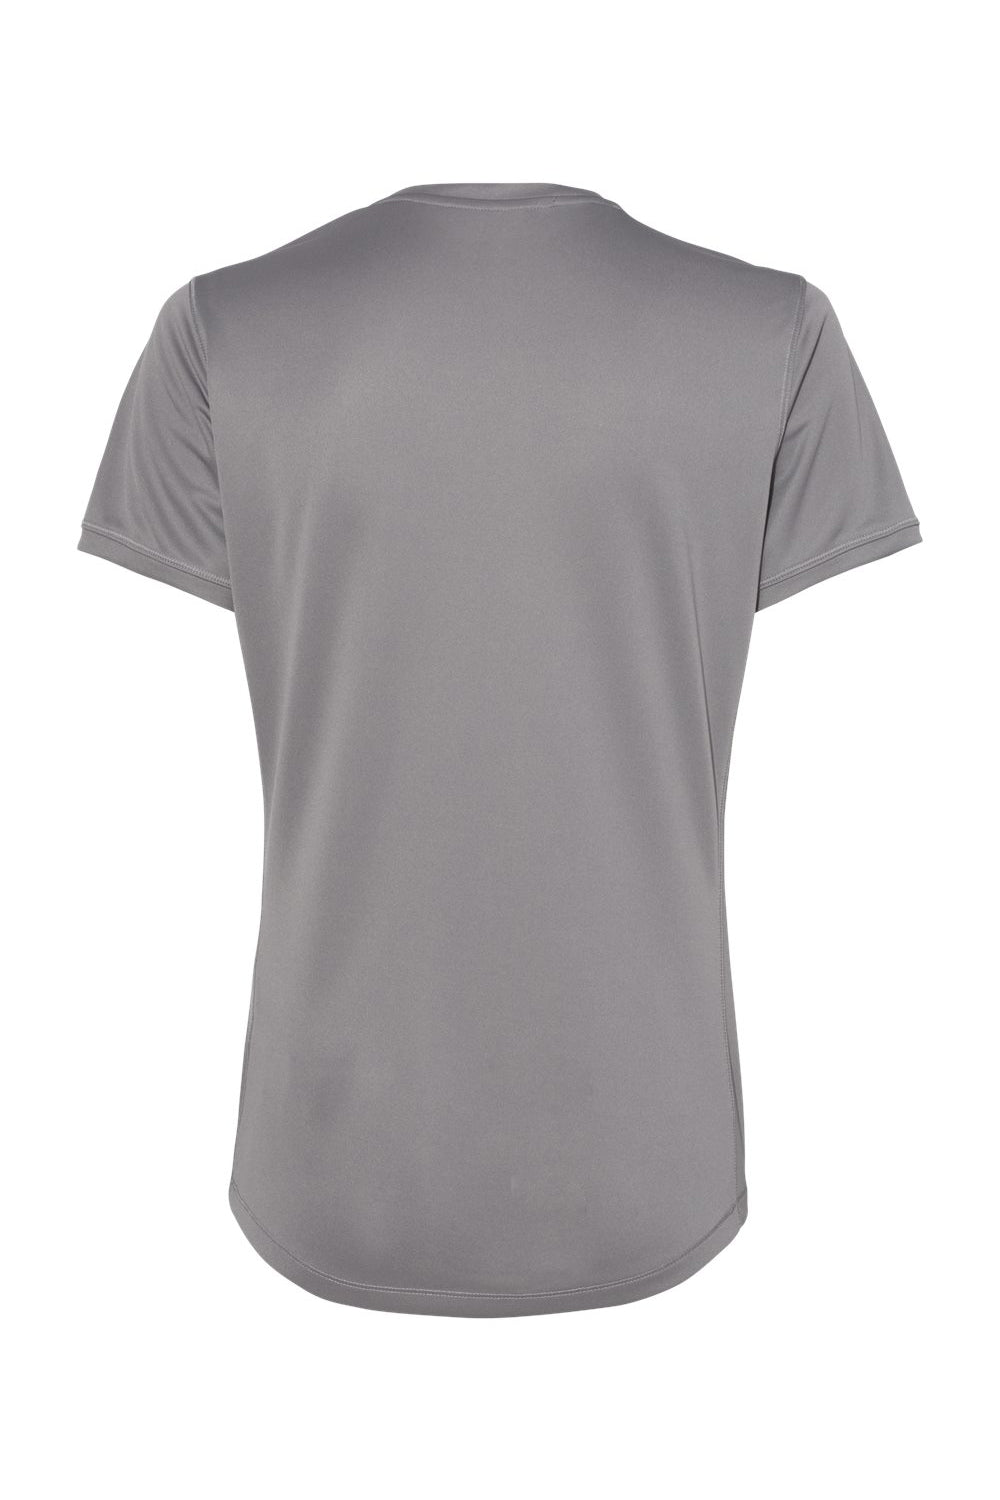 Adidas A377 Womens Short Sleeve Crewneck T-Shirt Grey Flat Back